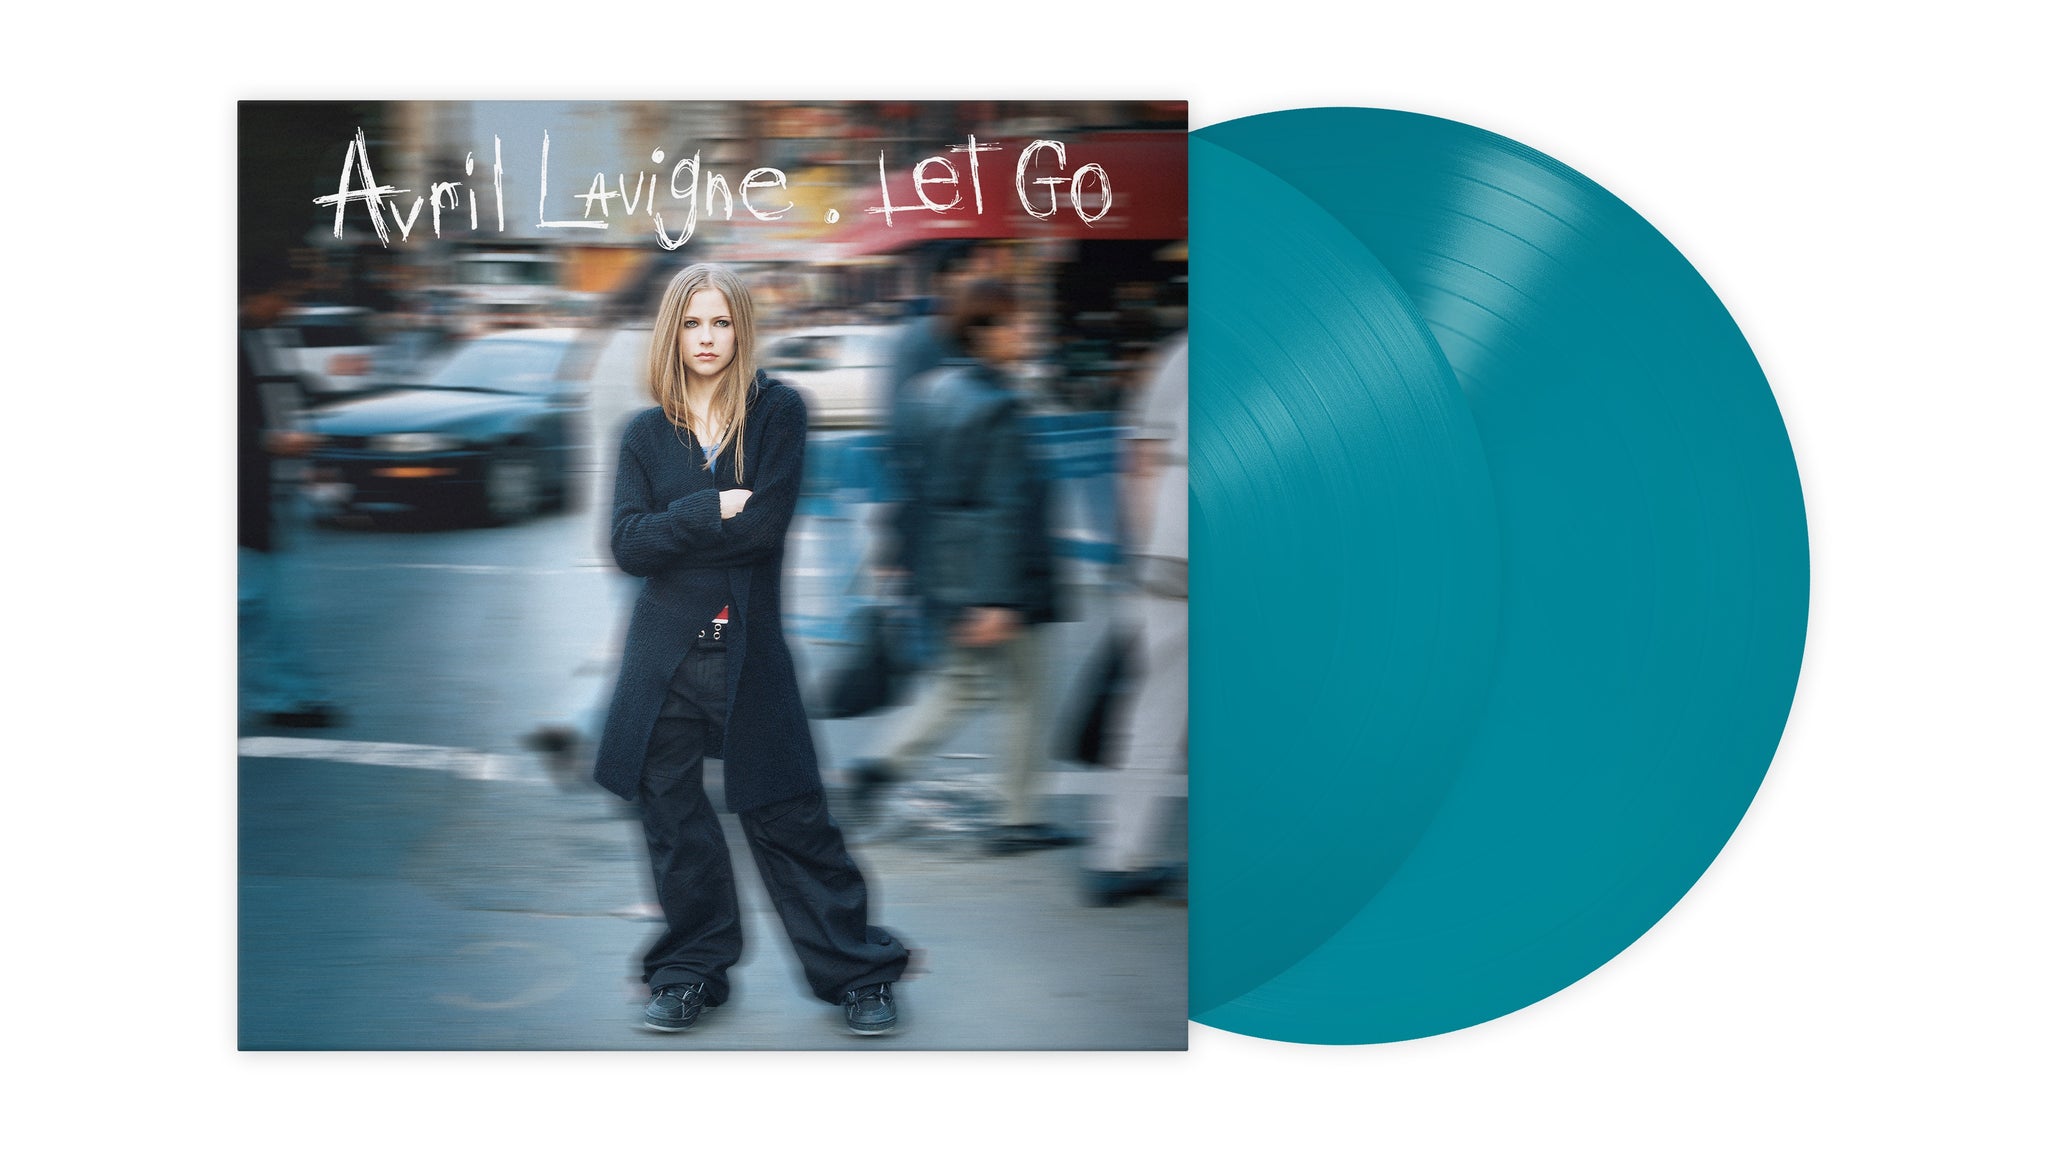 Avril Lavigne "Let Go" 2x12" Turquoise Vinyl - PRE-ORDER